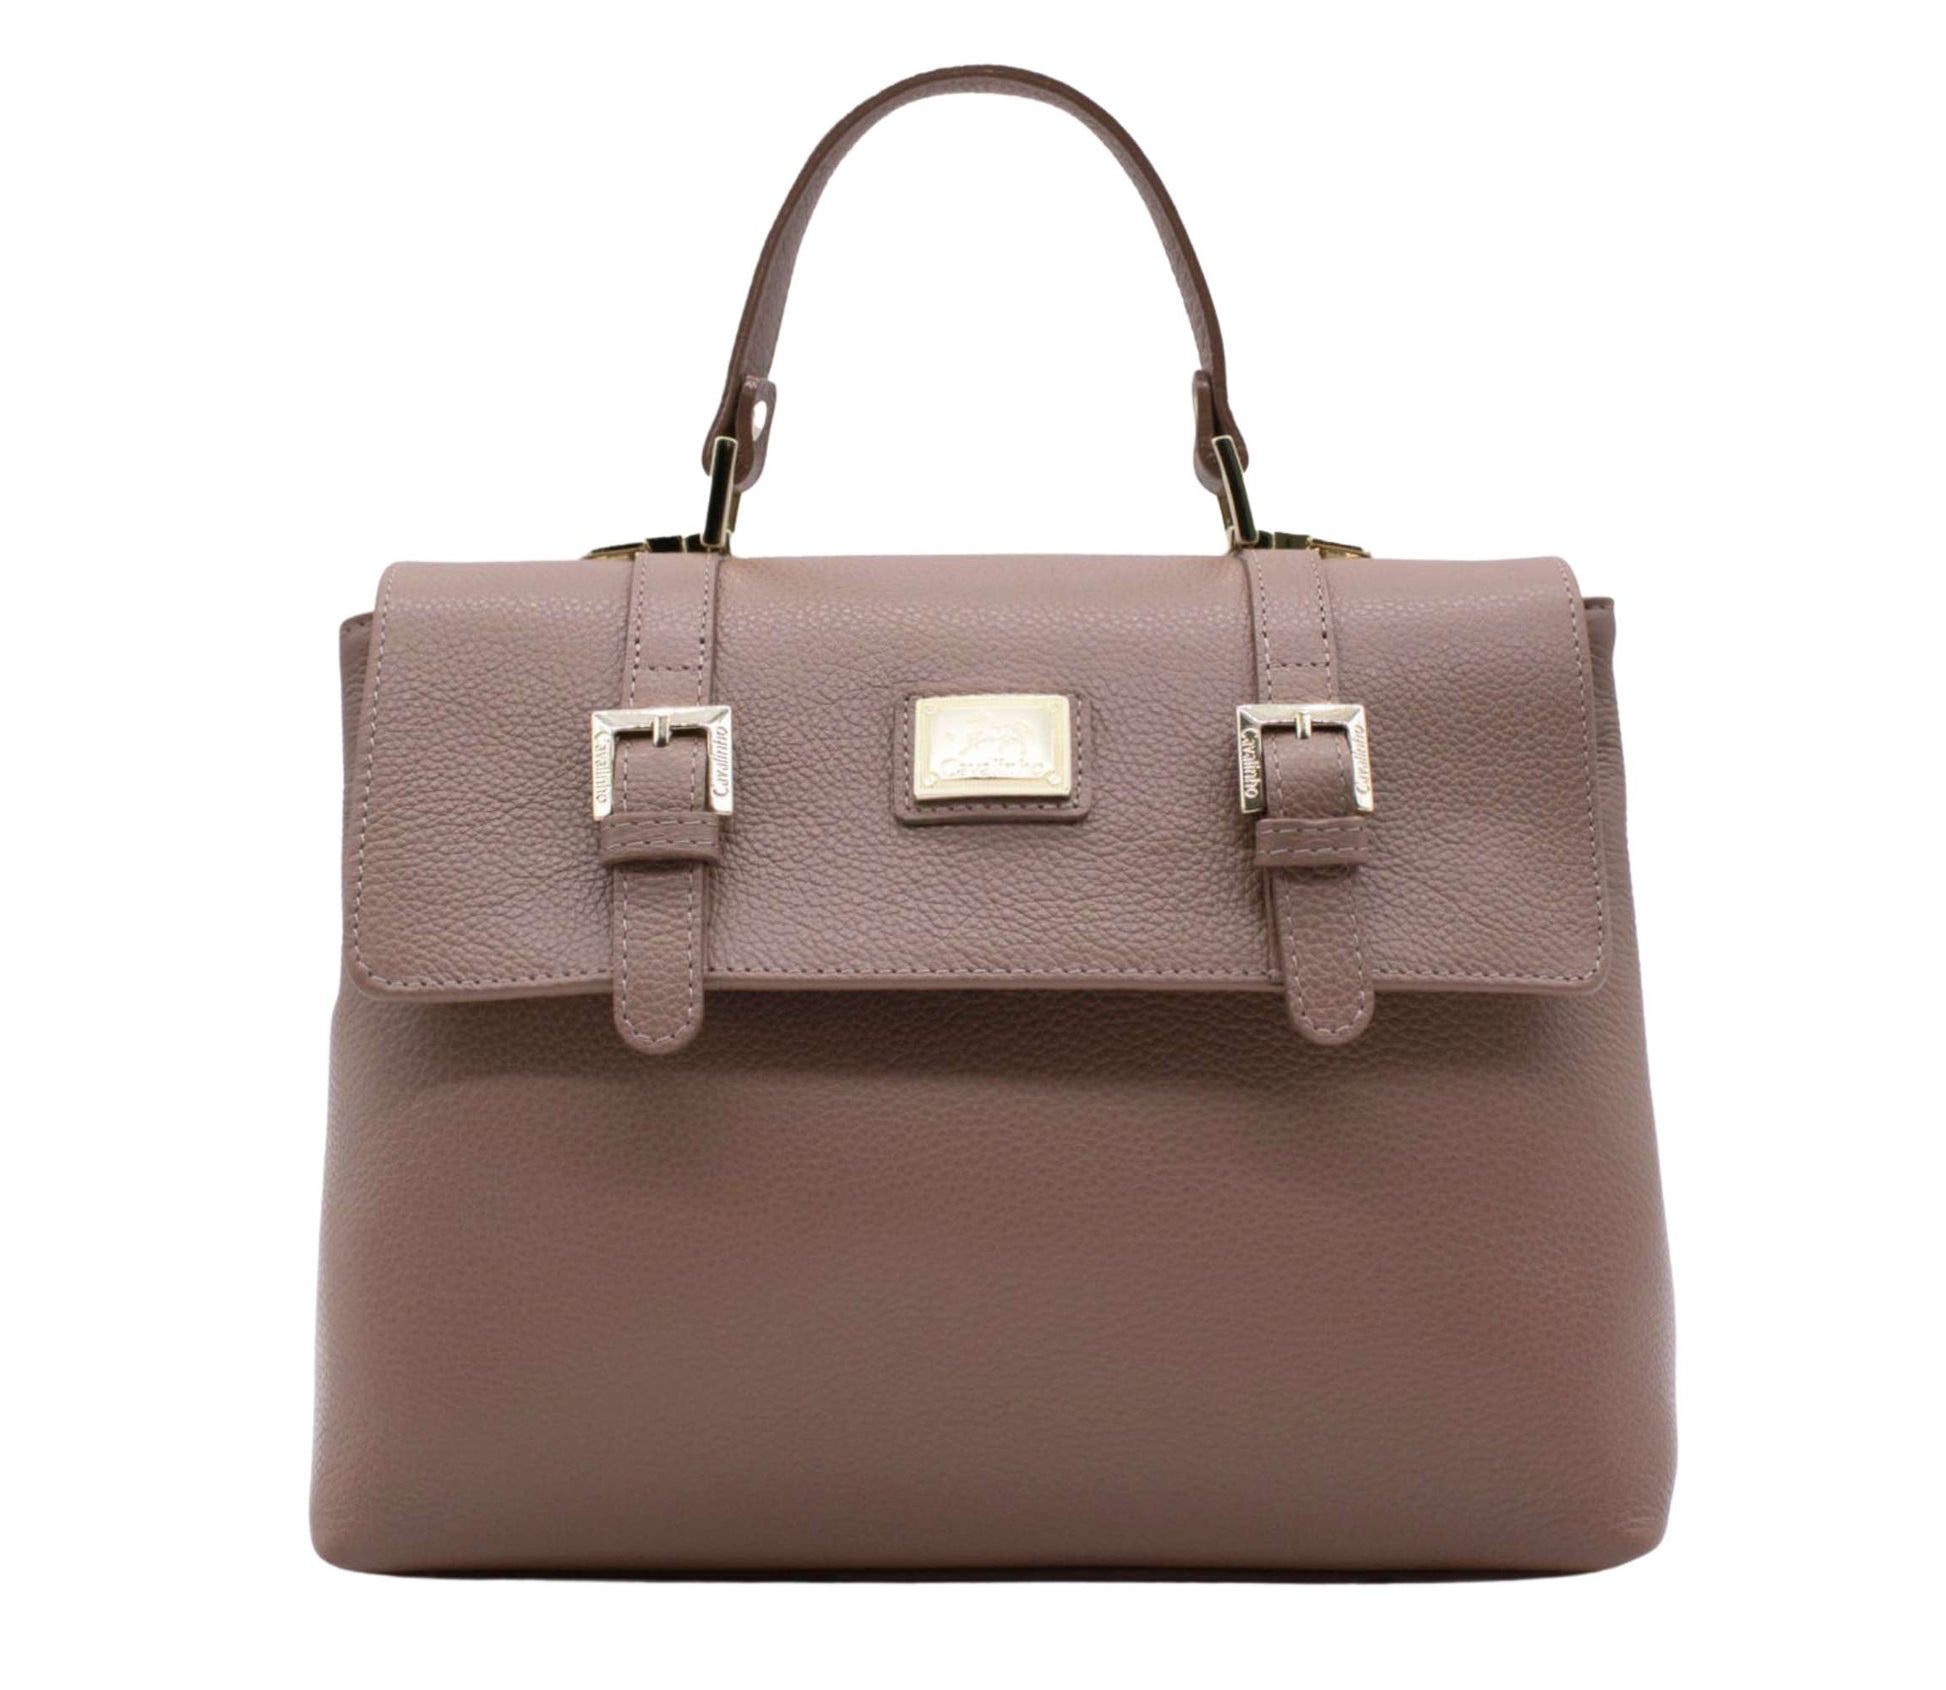 Cavalinho Muse Leather Handbag - Sand - 18300508.07.99